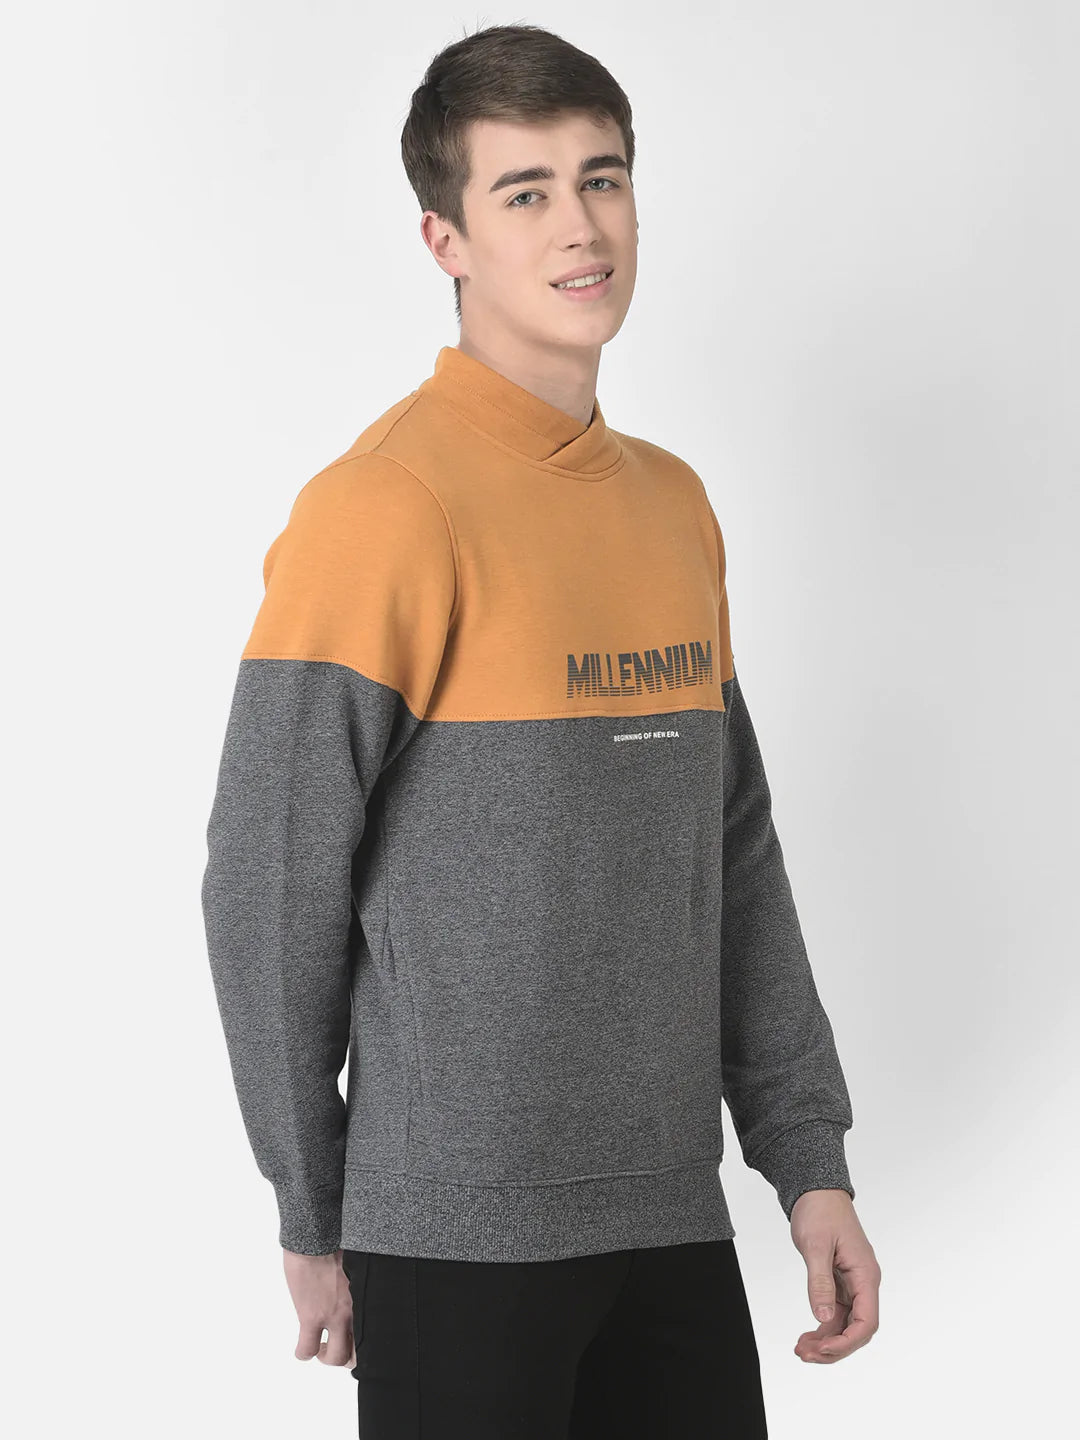  Mustard Colour-Blocked Millennium Sweatshirt